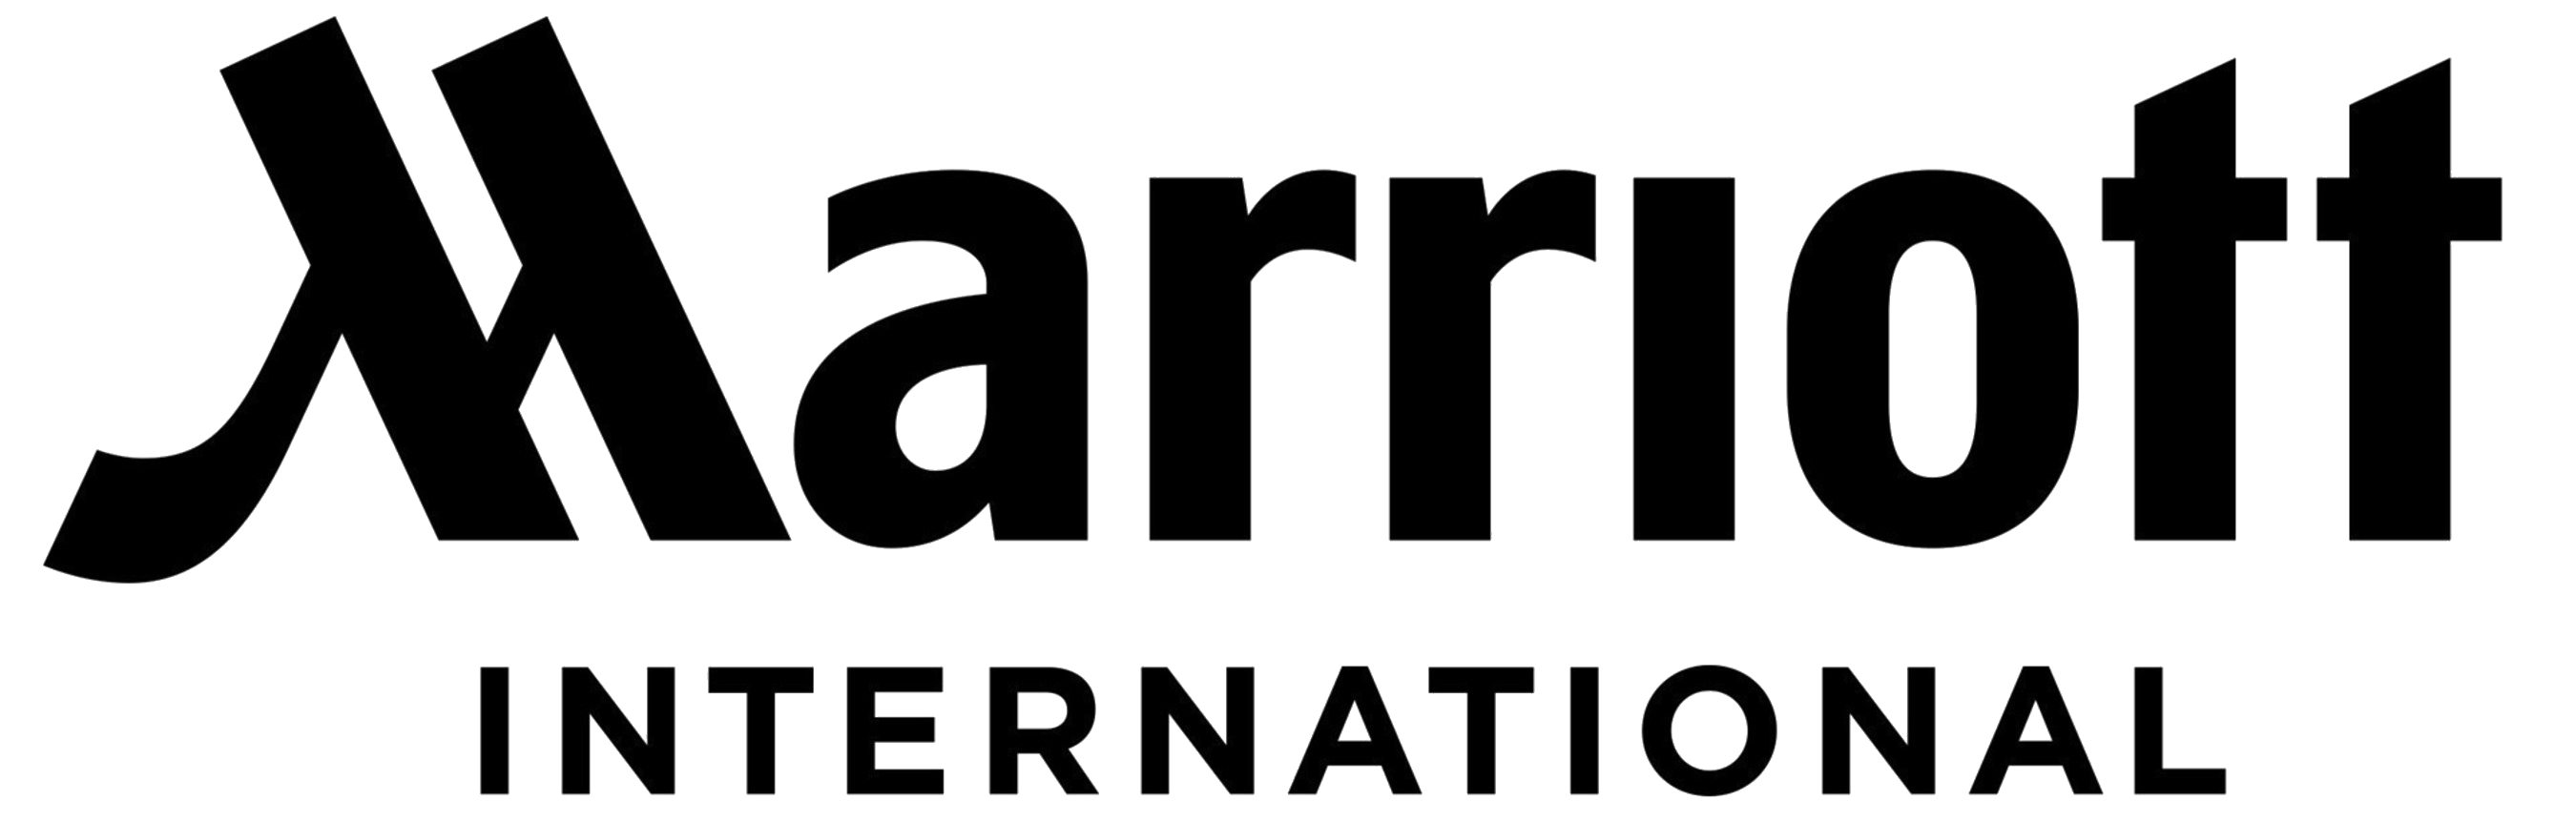 Marriot International Logo